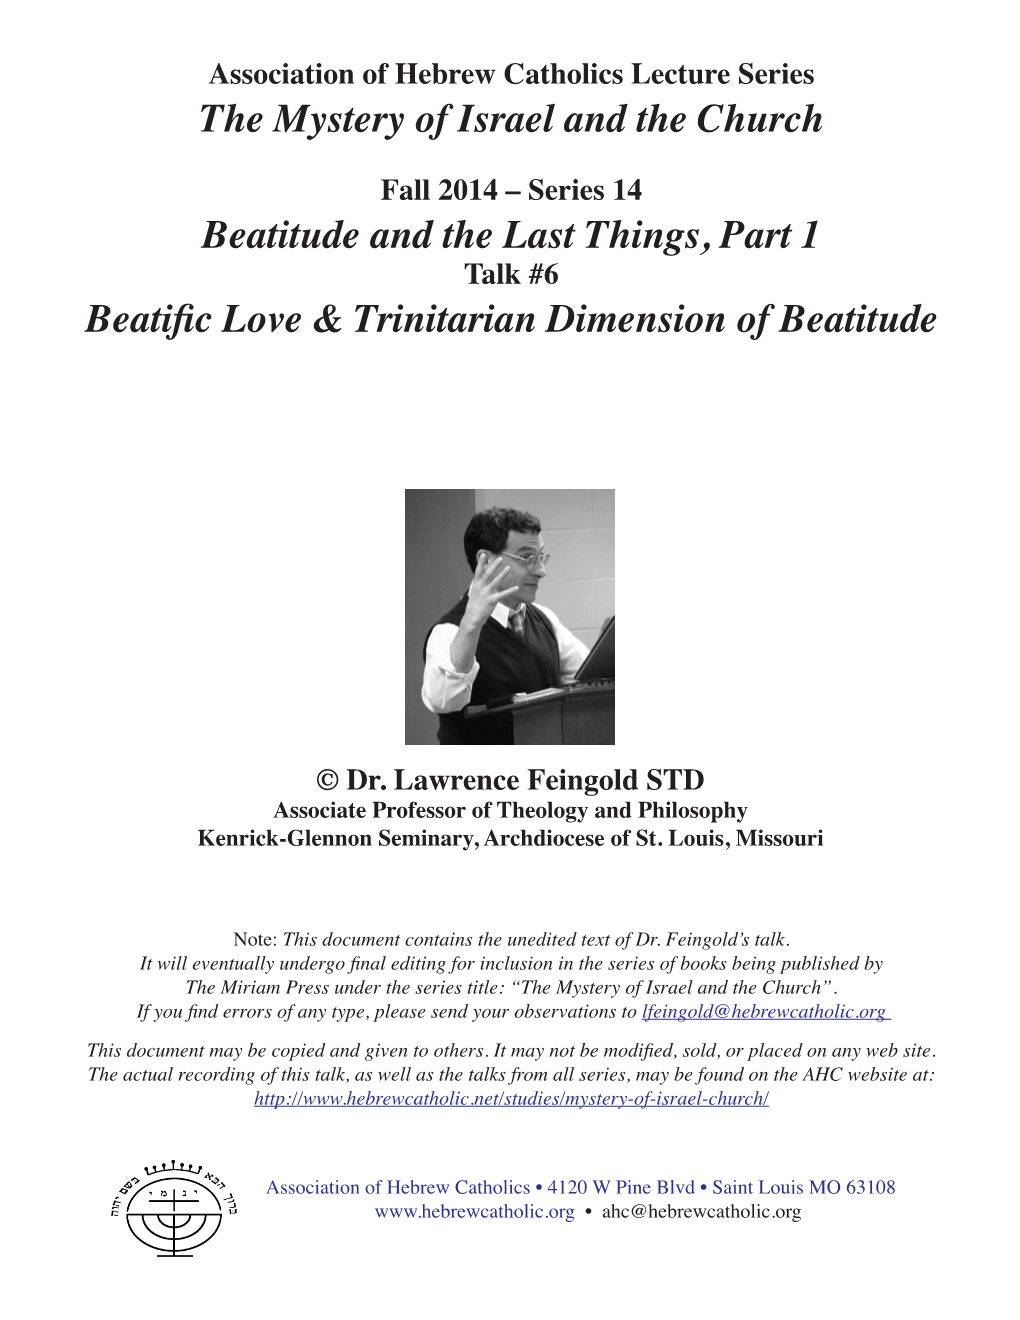 Beatitude and the Last Things, Part 1 Beatific Love & Trinitarian